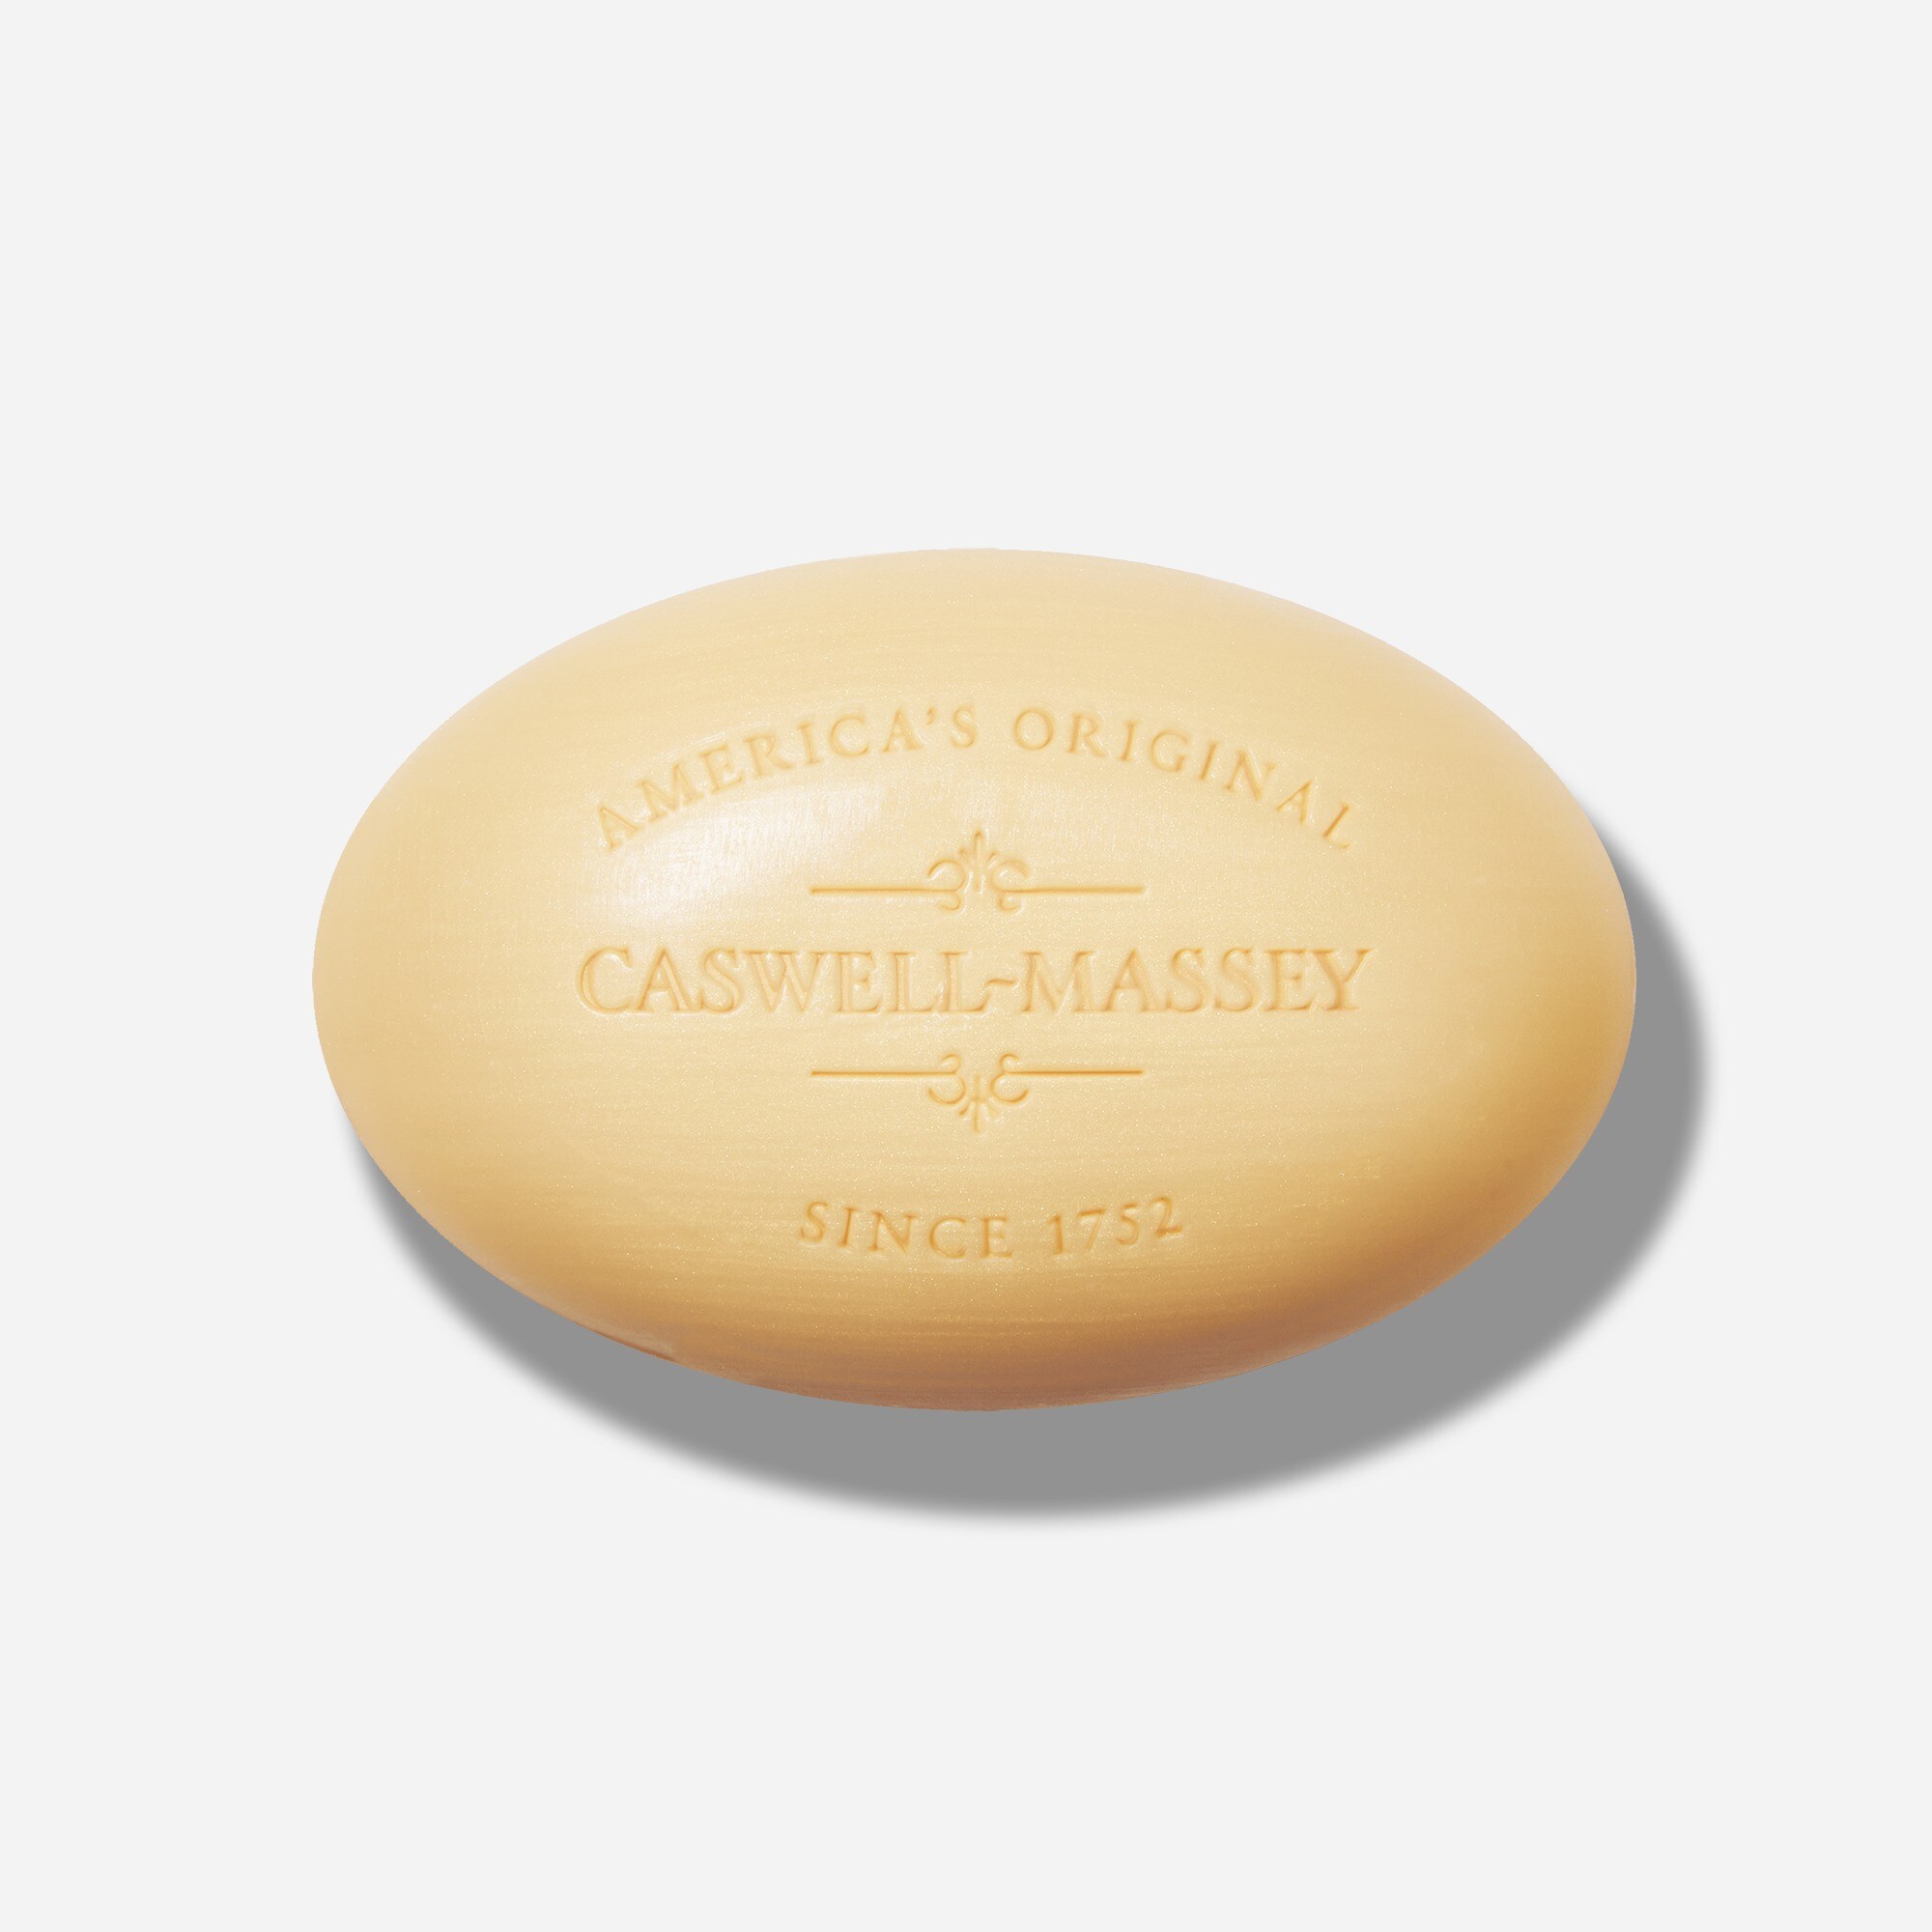  Caswell-Massey 2571 bar soap